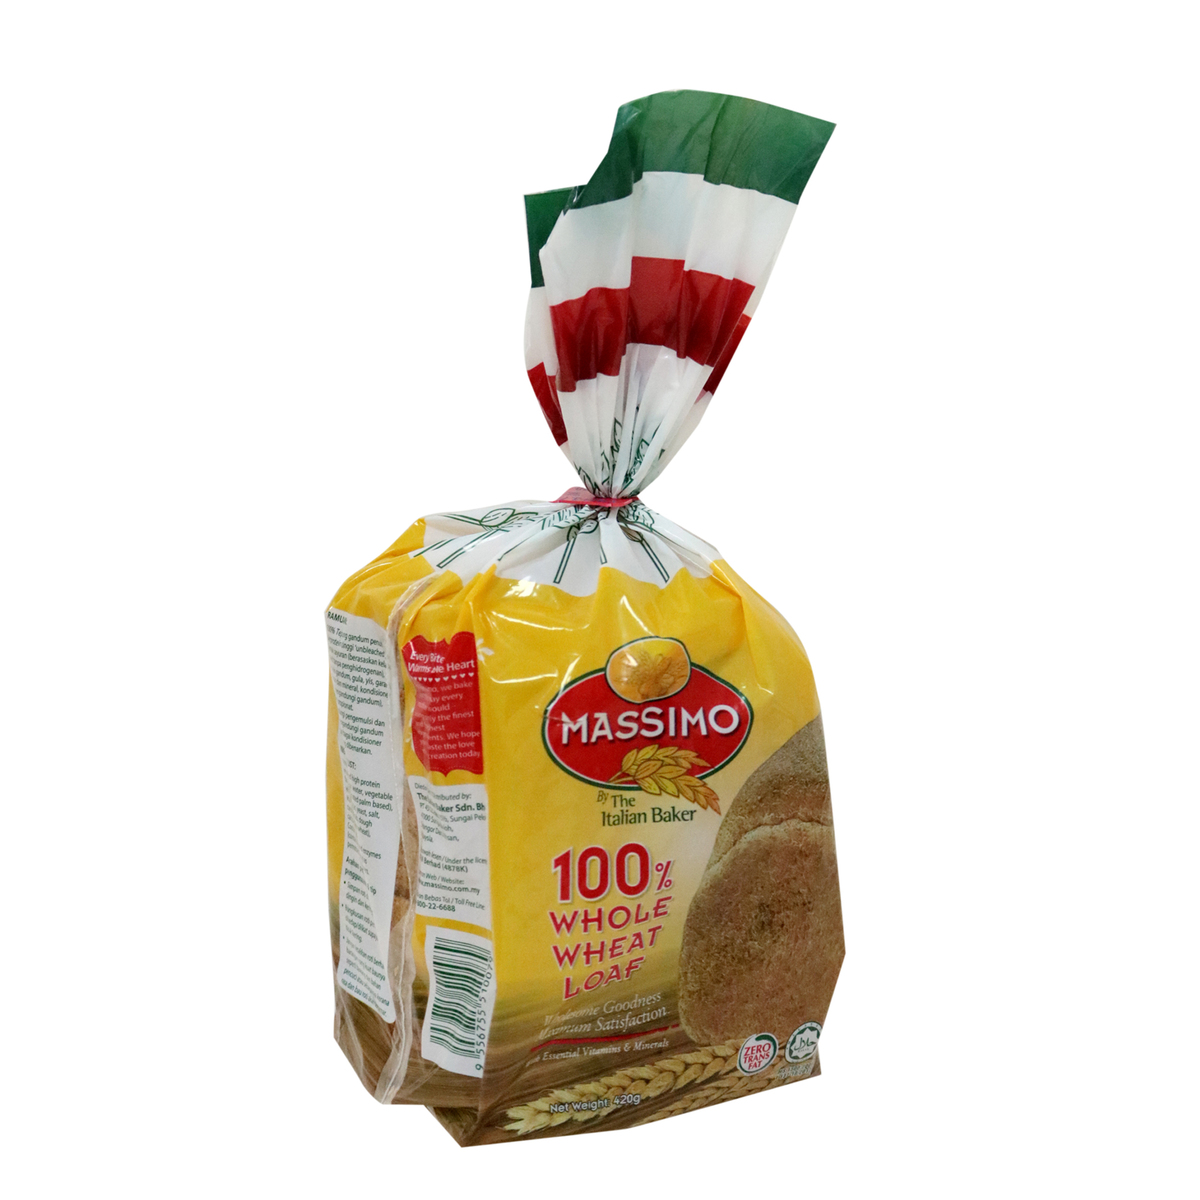 Massimo whole wheat bread